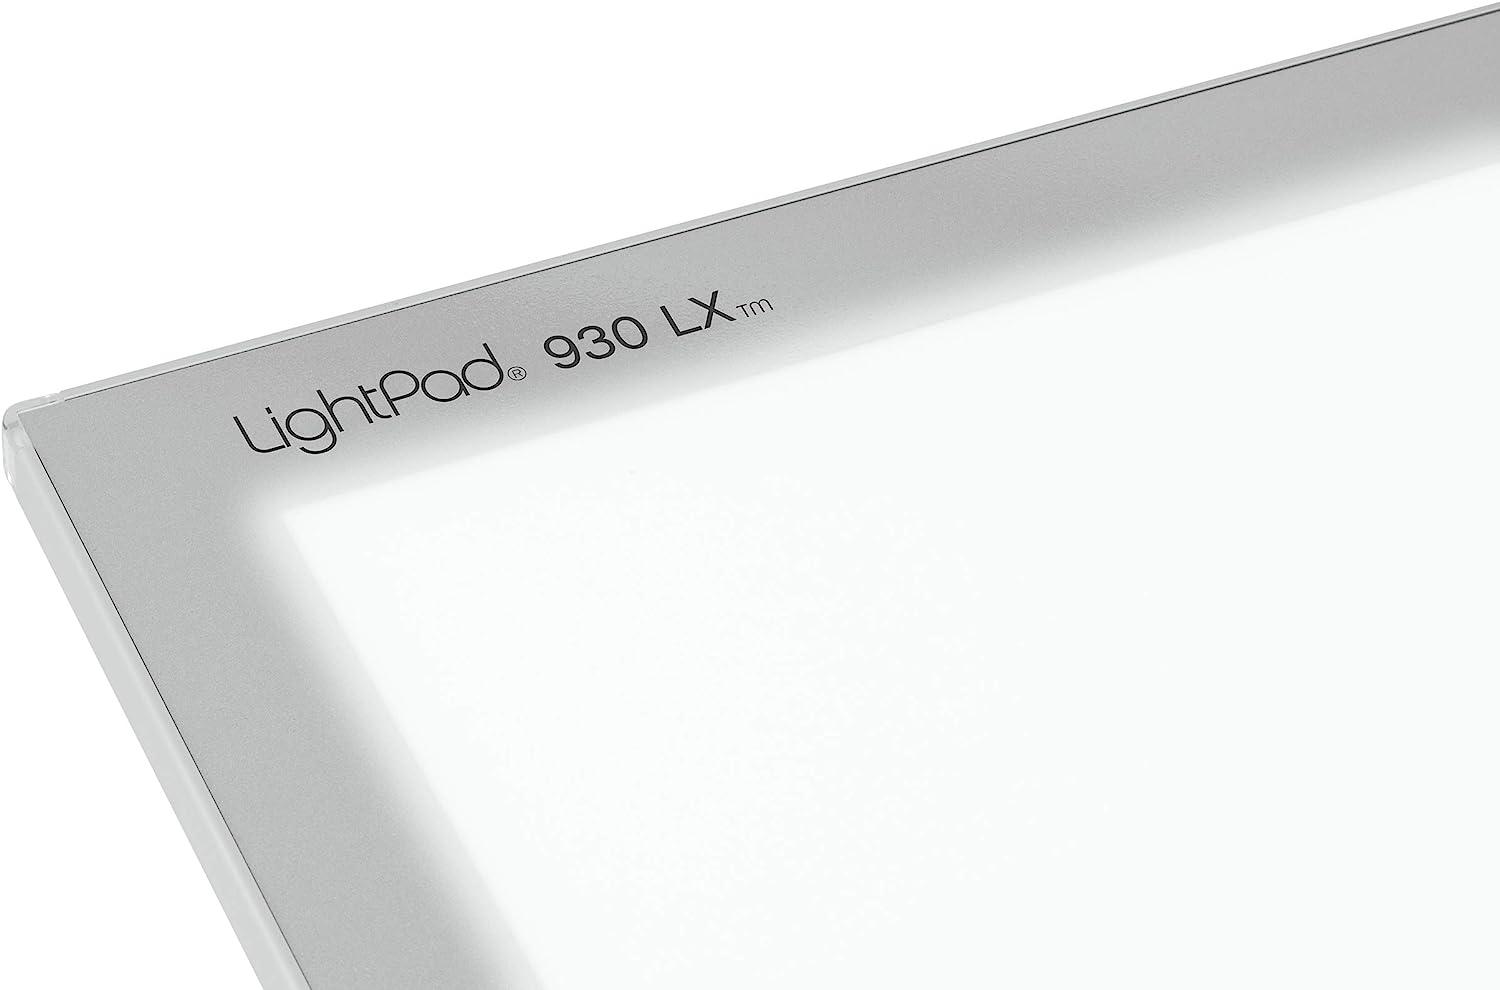 Artograph Lightpad 930 LX